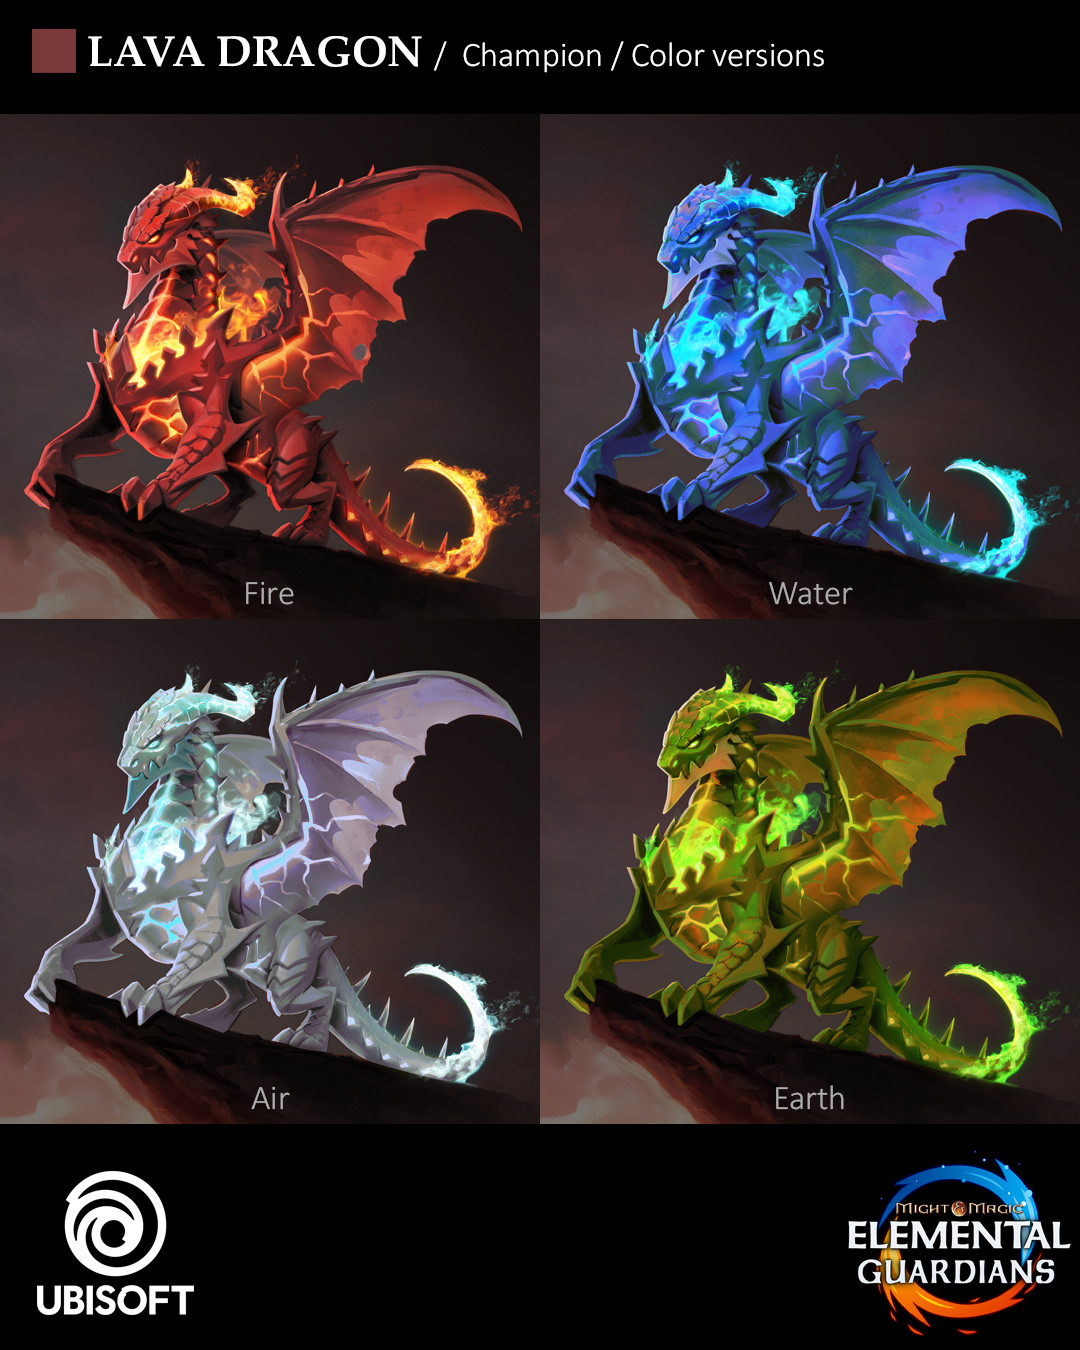 Lava Dragon - Champion Version - Color Versions
(videogame Might&amp;Magic Elemental Guardians)